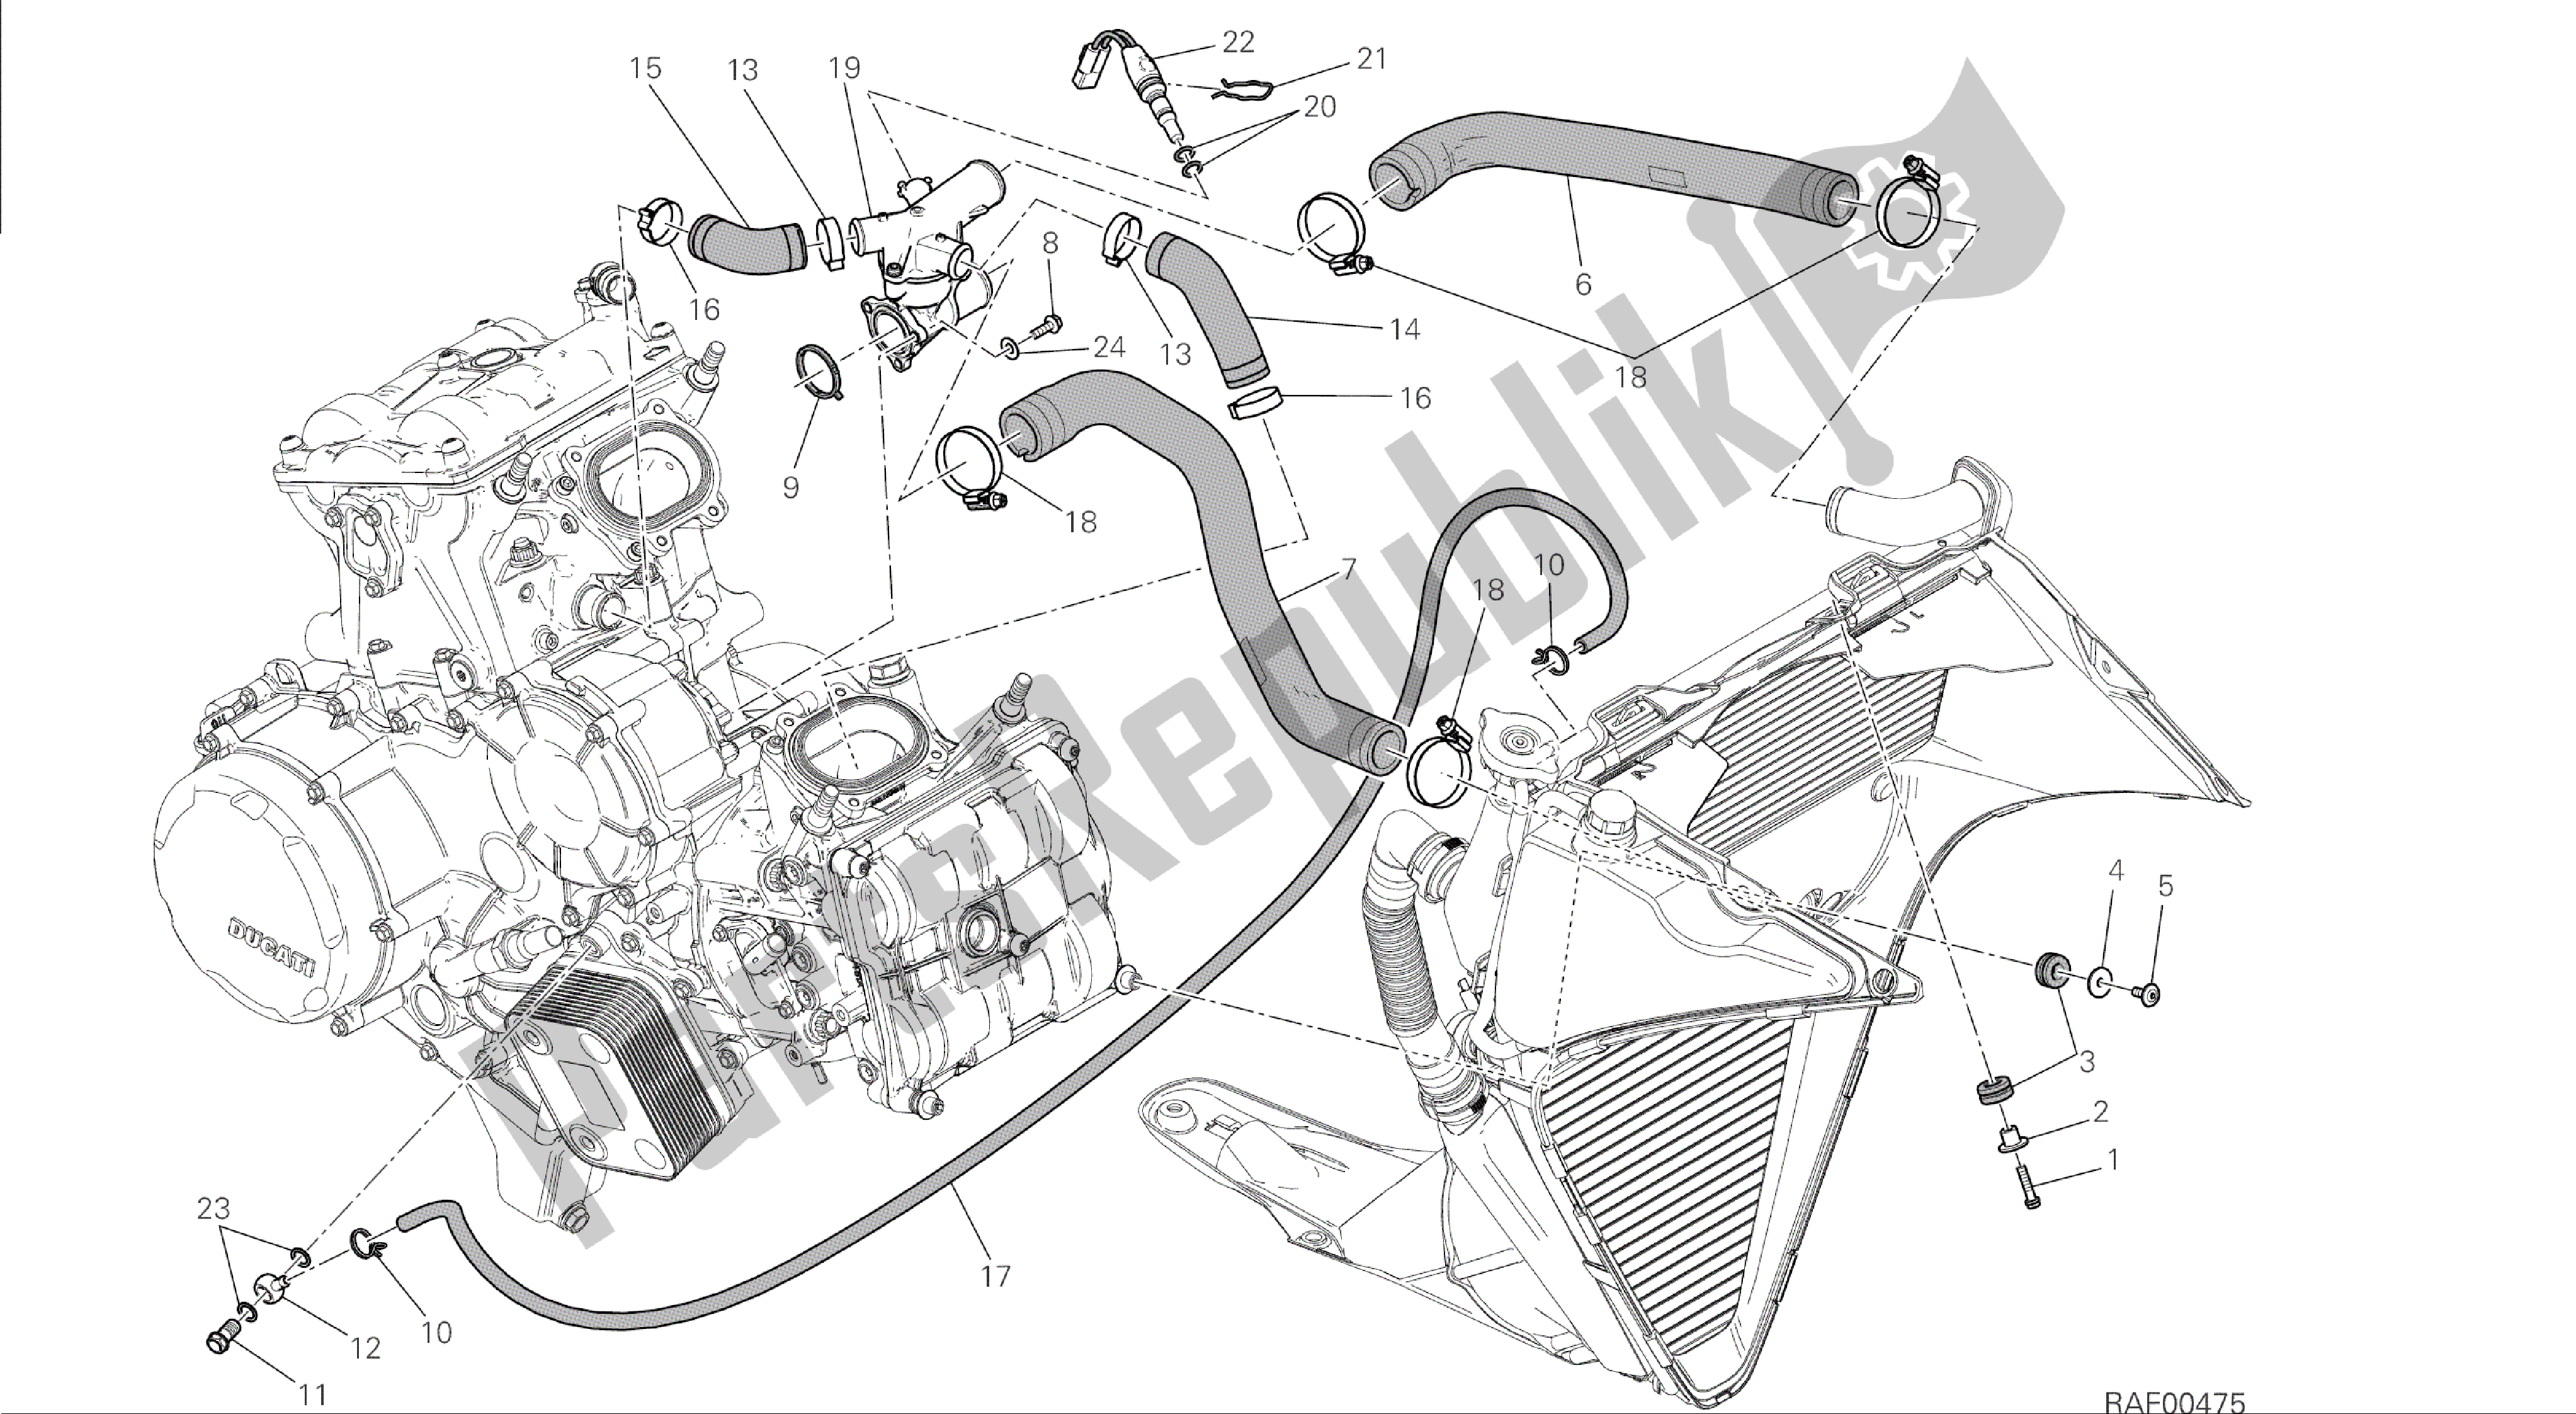 Alle onderdelen voor de Tekening 031 - Koelsysteem [mod: 1199 Abs; Xst: Aus, Bra, Chn, Eur, Fra, Jap] Groepsframe van de Ducati Panigale ABS 1199 2014